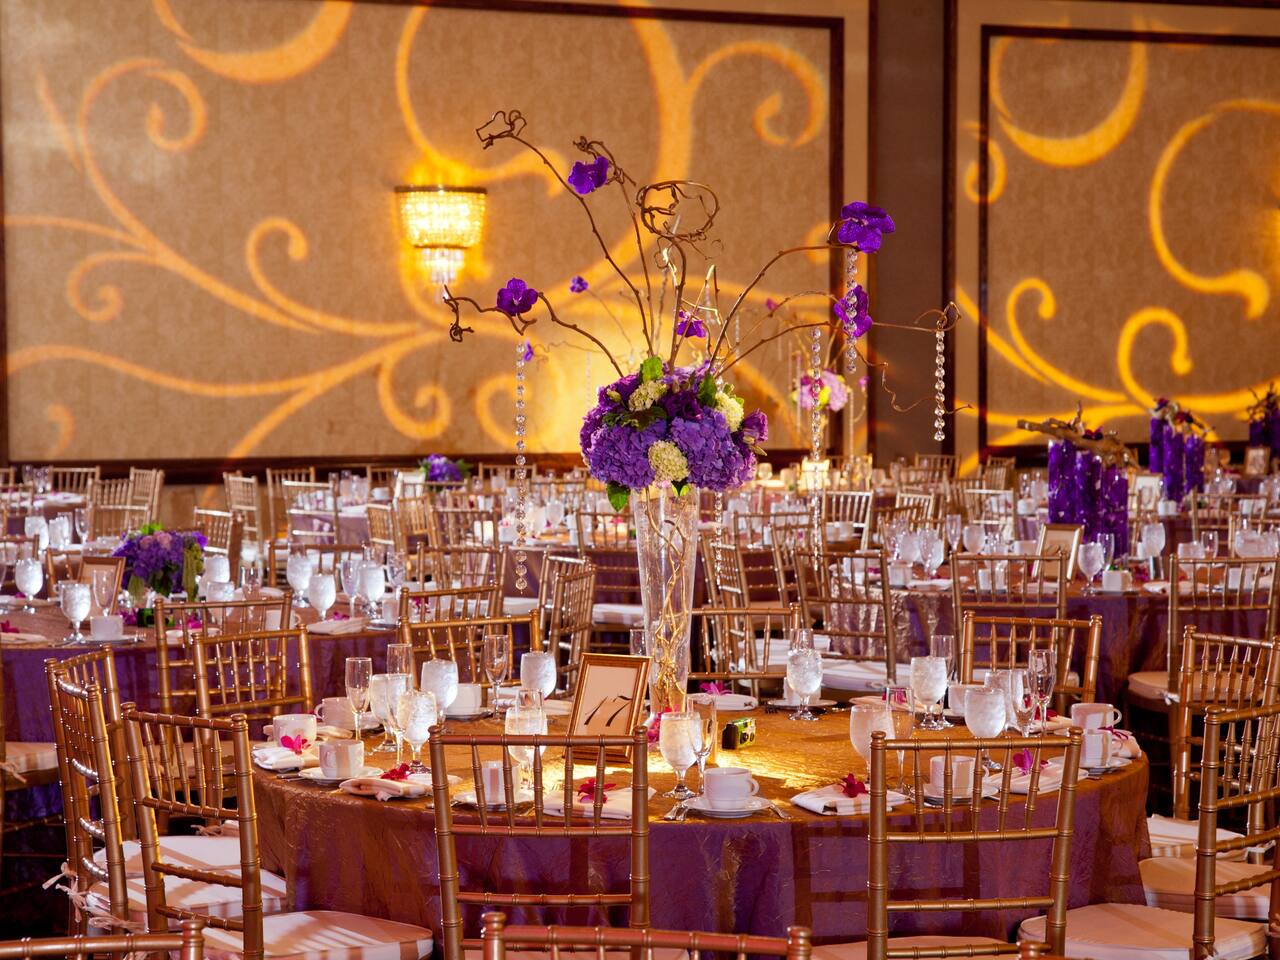 Regency Ballroom wedding reception set-up with banquet tables